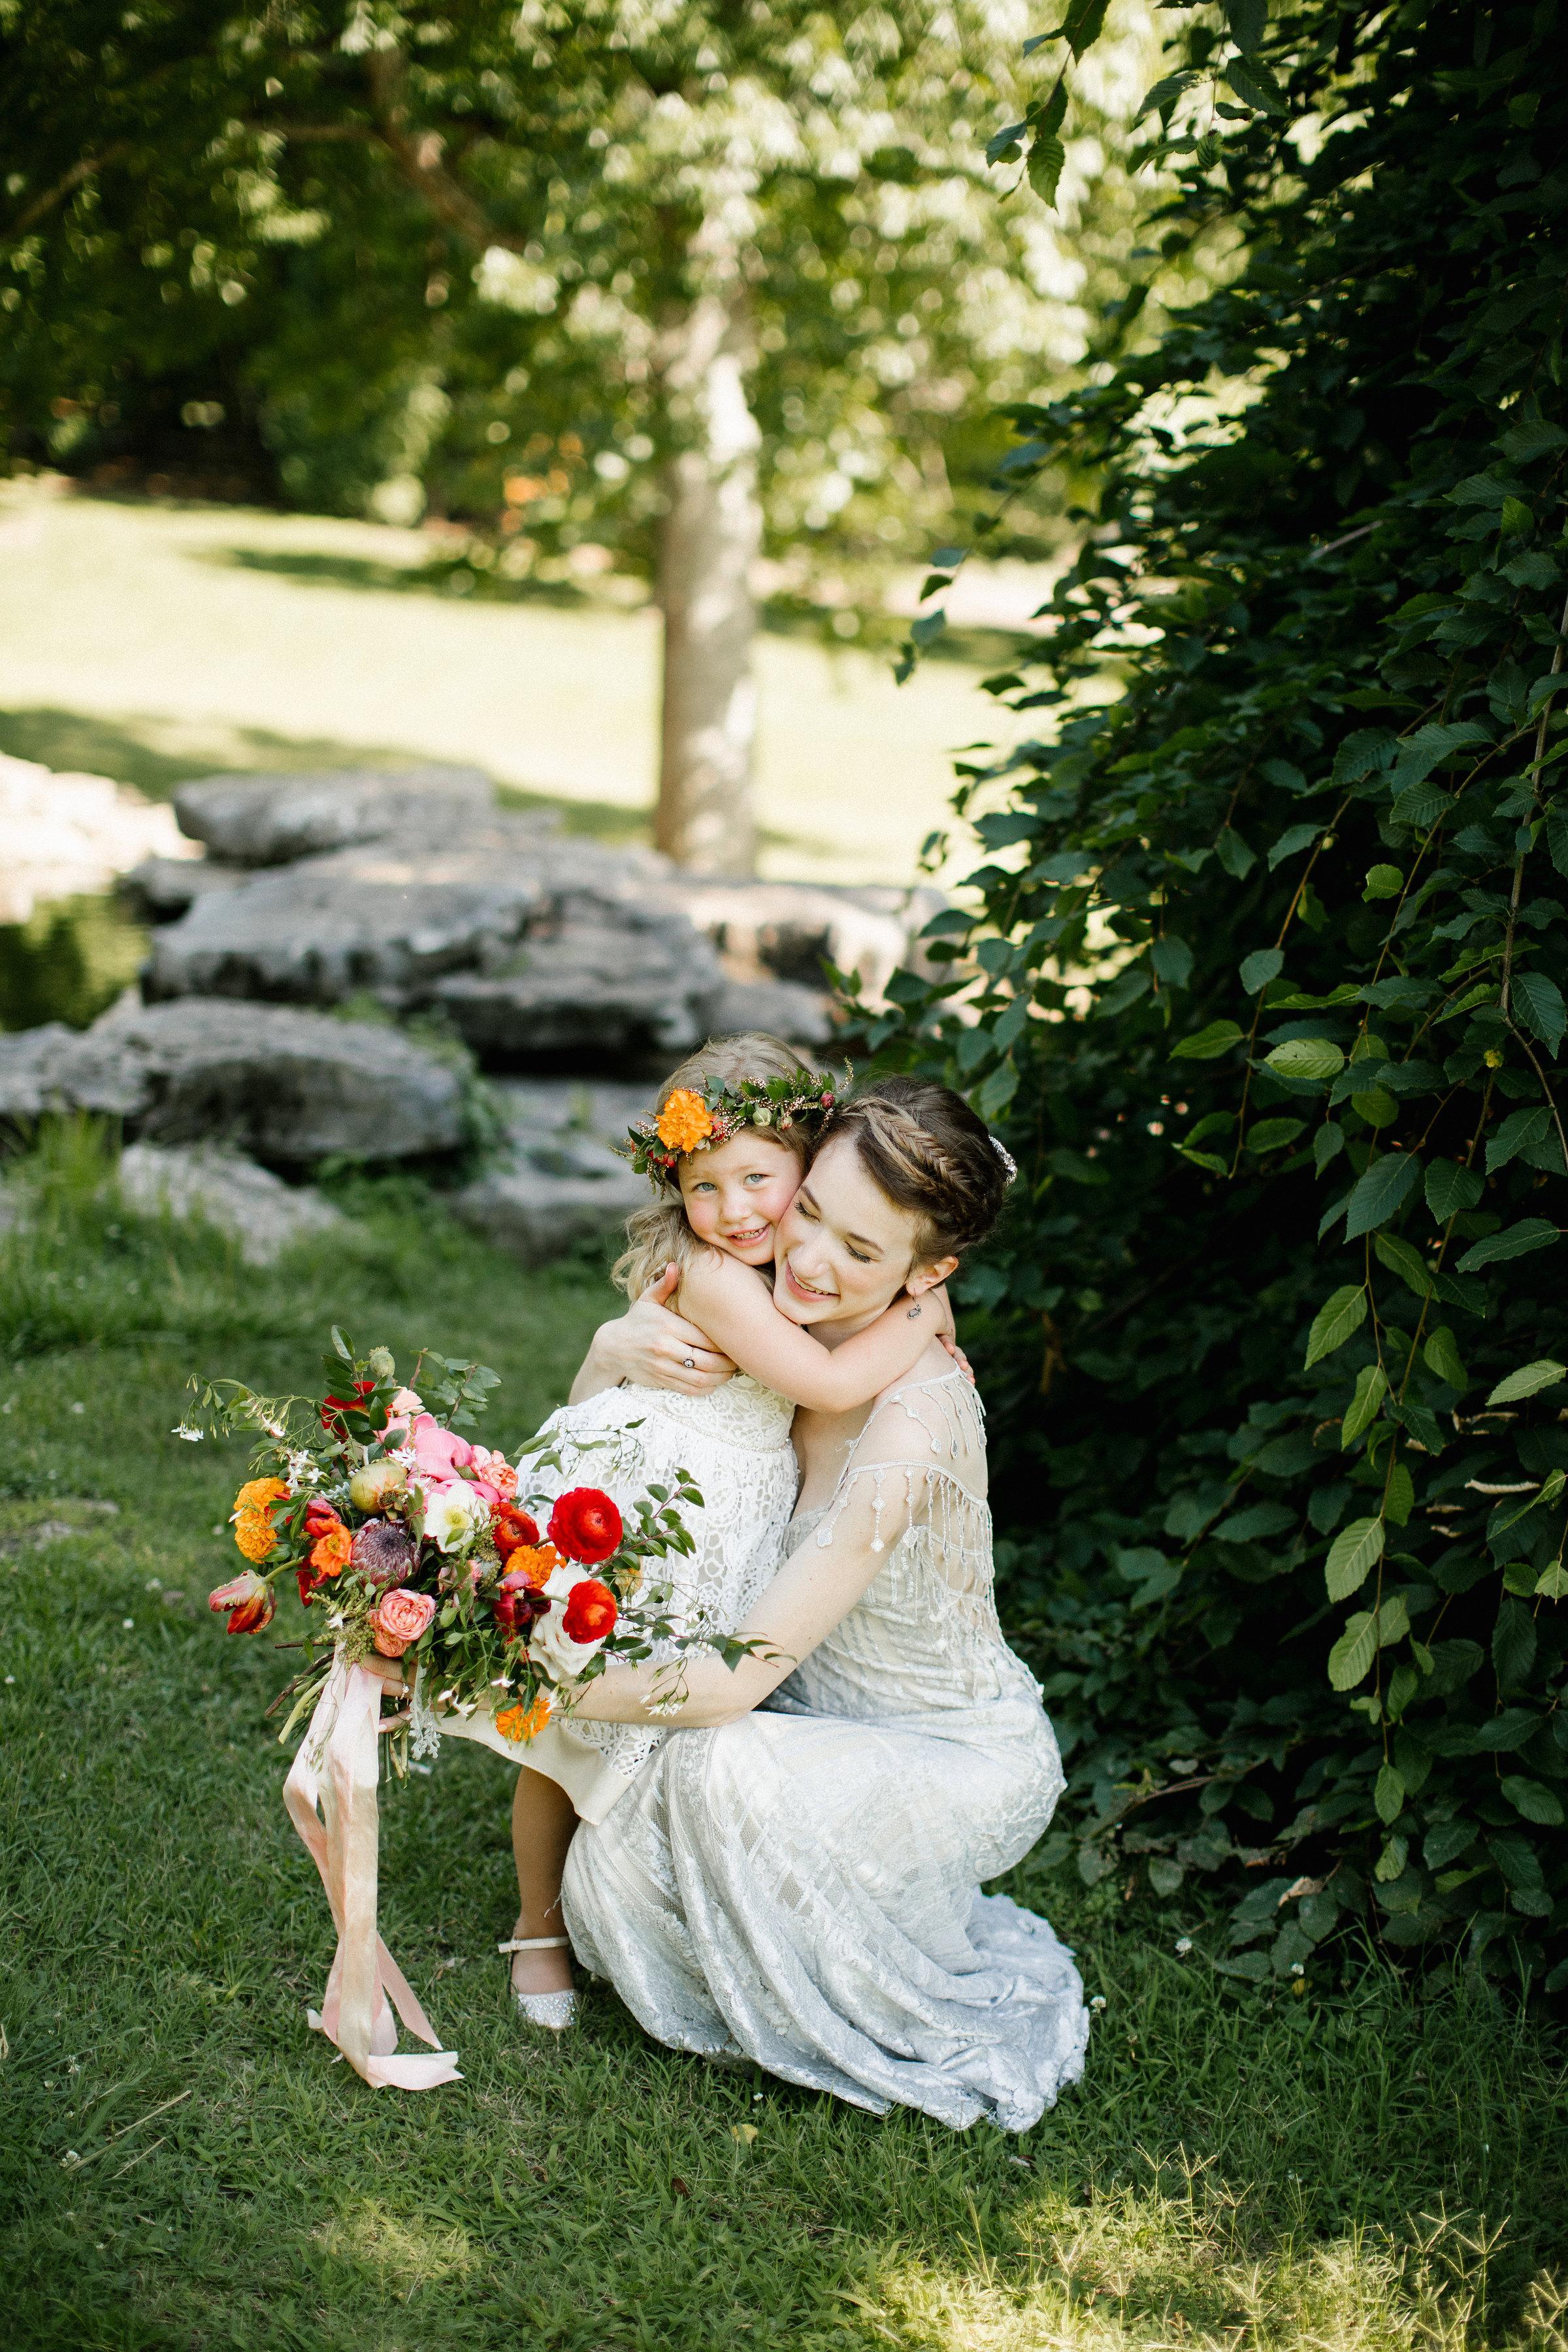 Simple flower girl crown for a summery botanic garden wedding in Nashville, TN